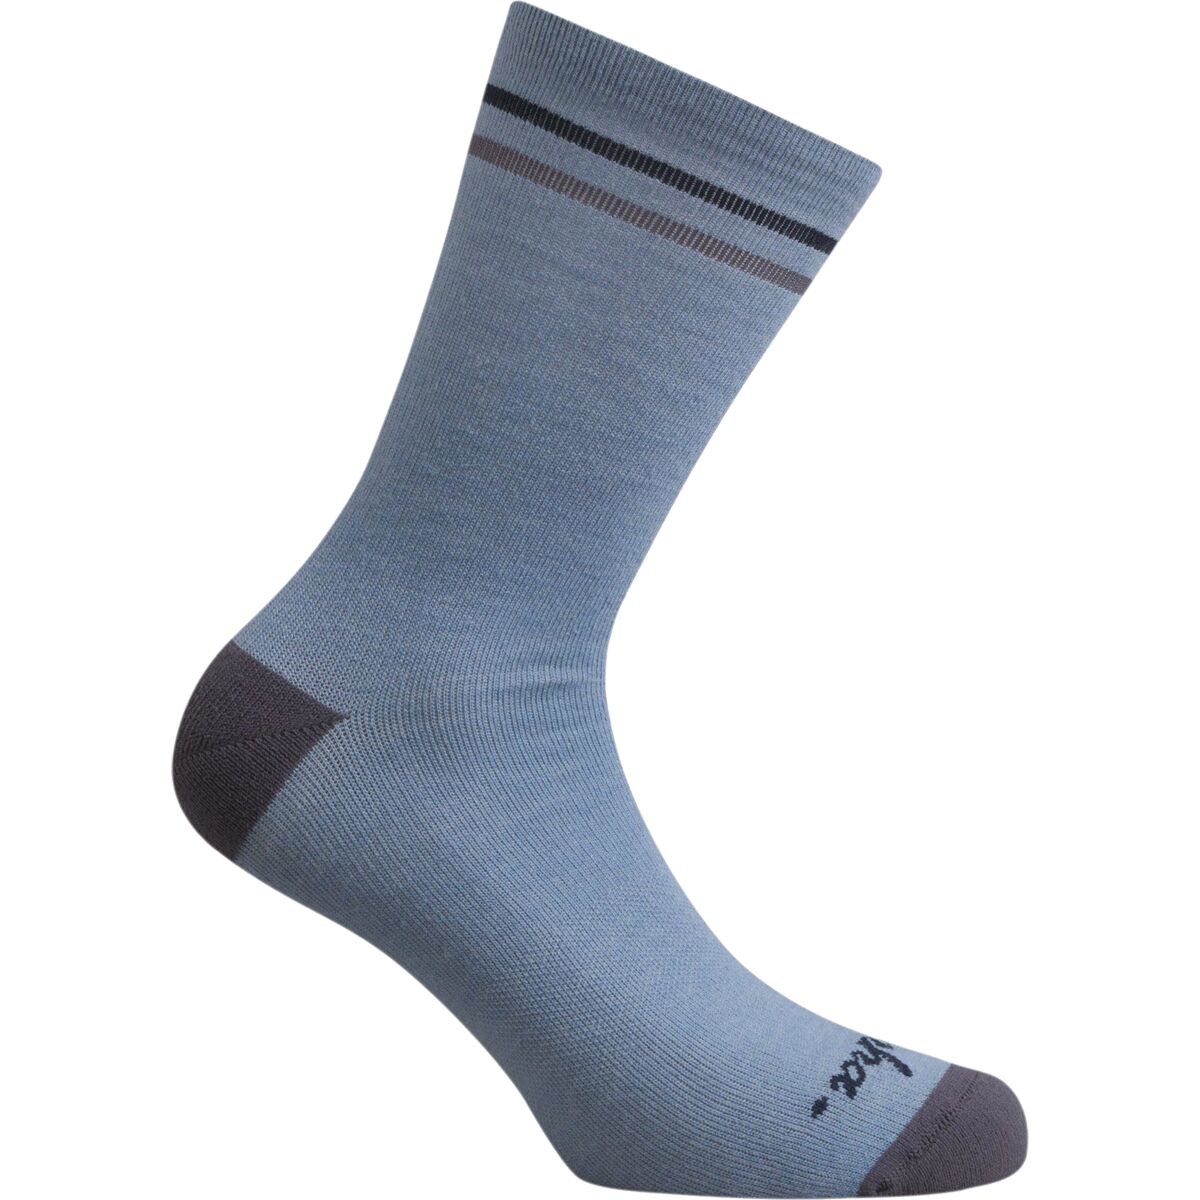 Rapha Merino Socks - Regular